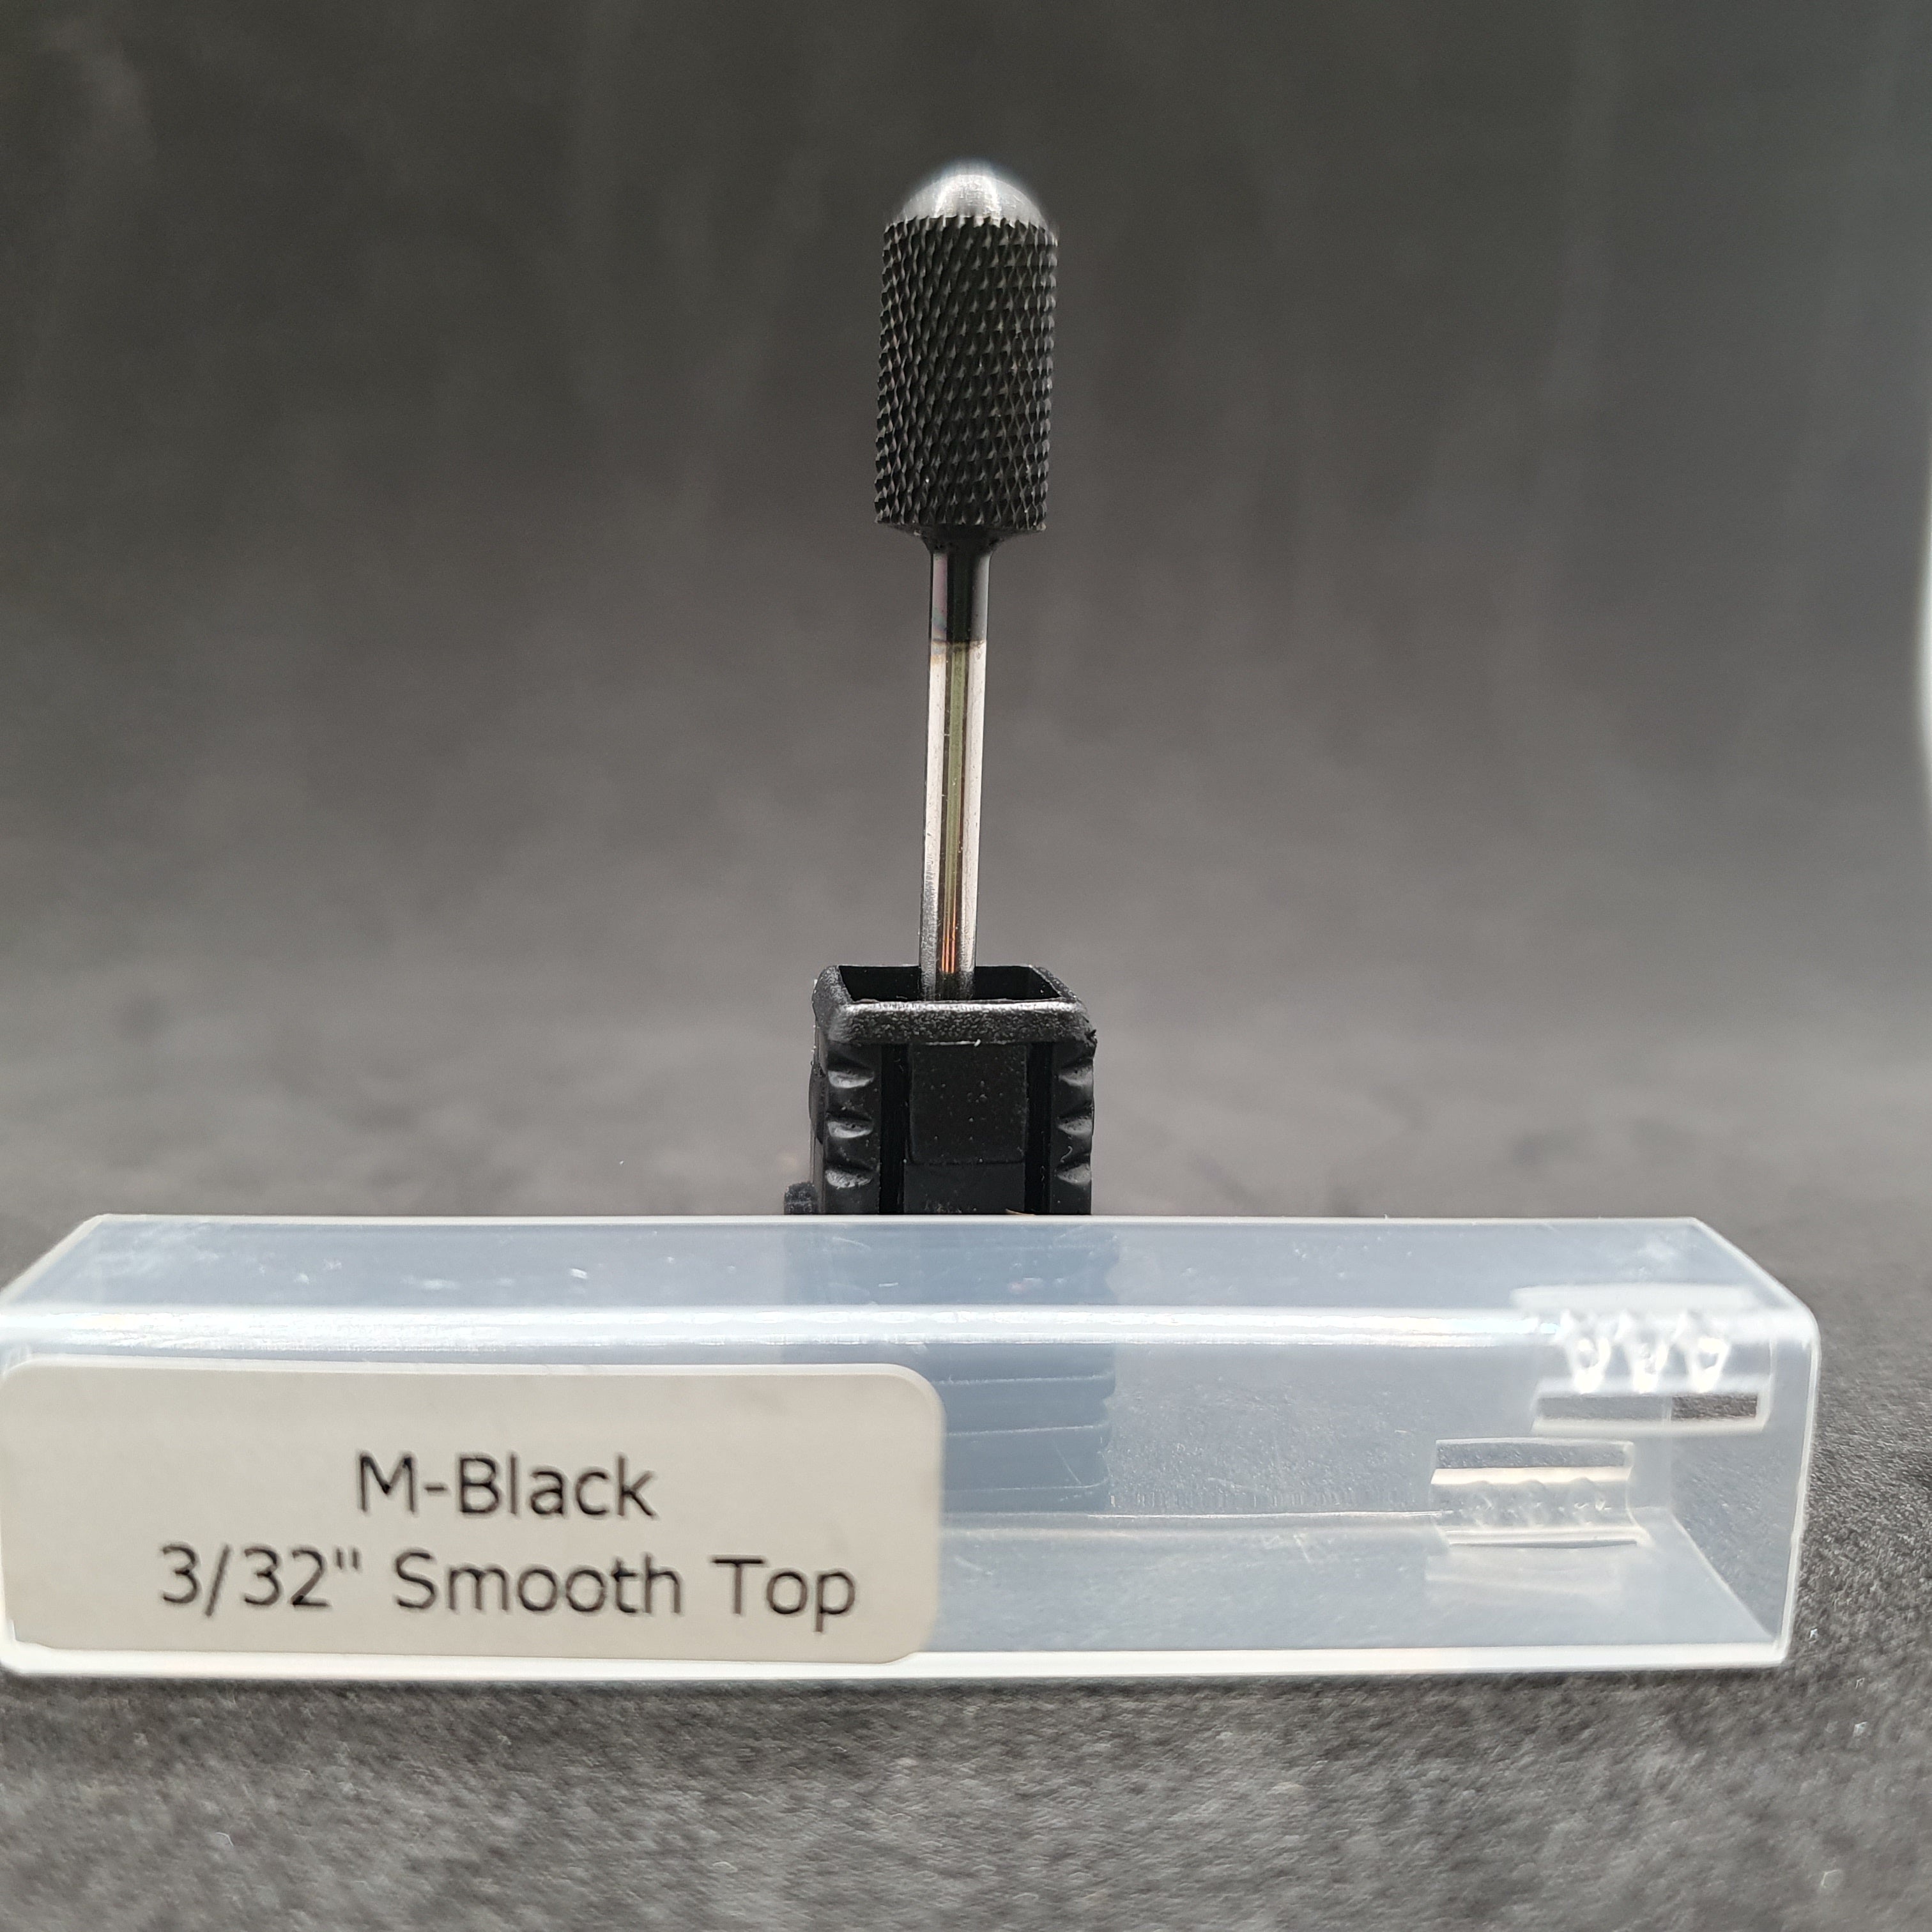 M-BLACK 3/32" SMOOTH TOP